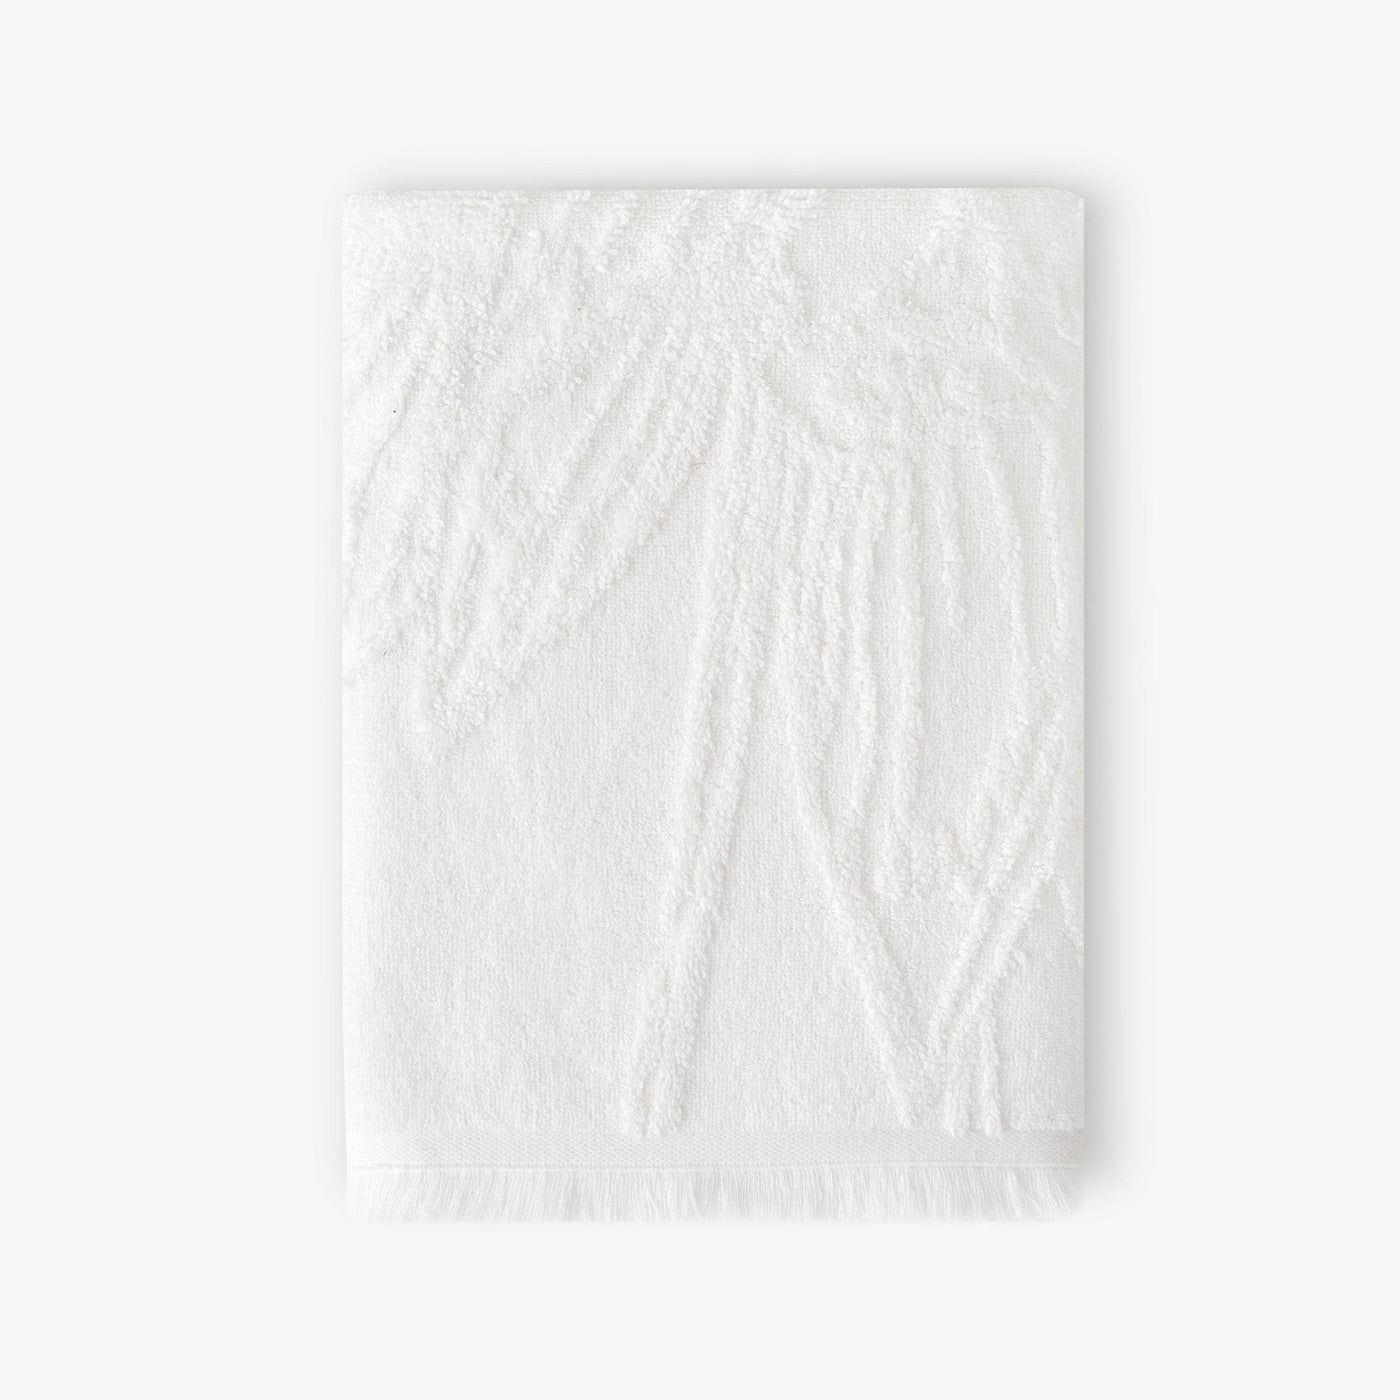 Barbara Set of 2 Jacquard Fringed 100% Turkish Cotton Hand Towels, Off-White Hand Towels sazy.com